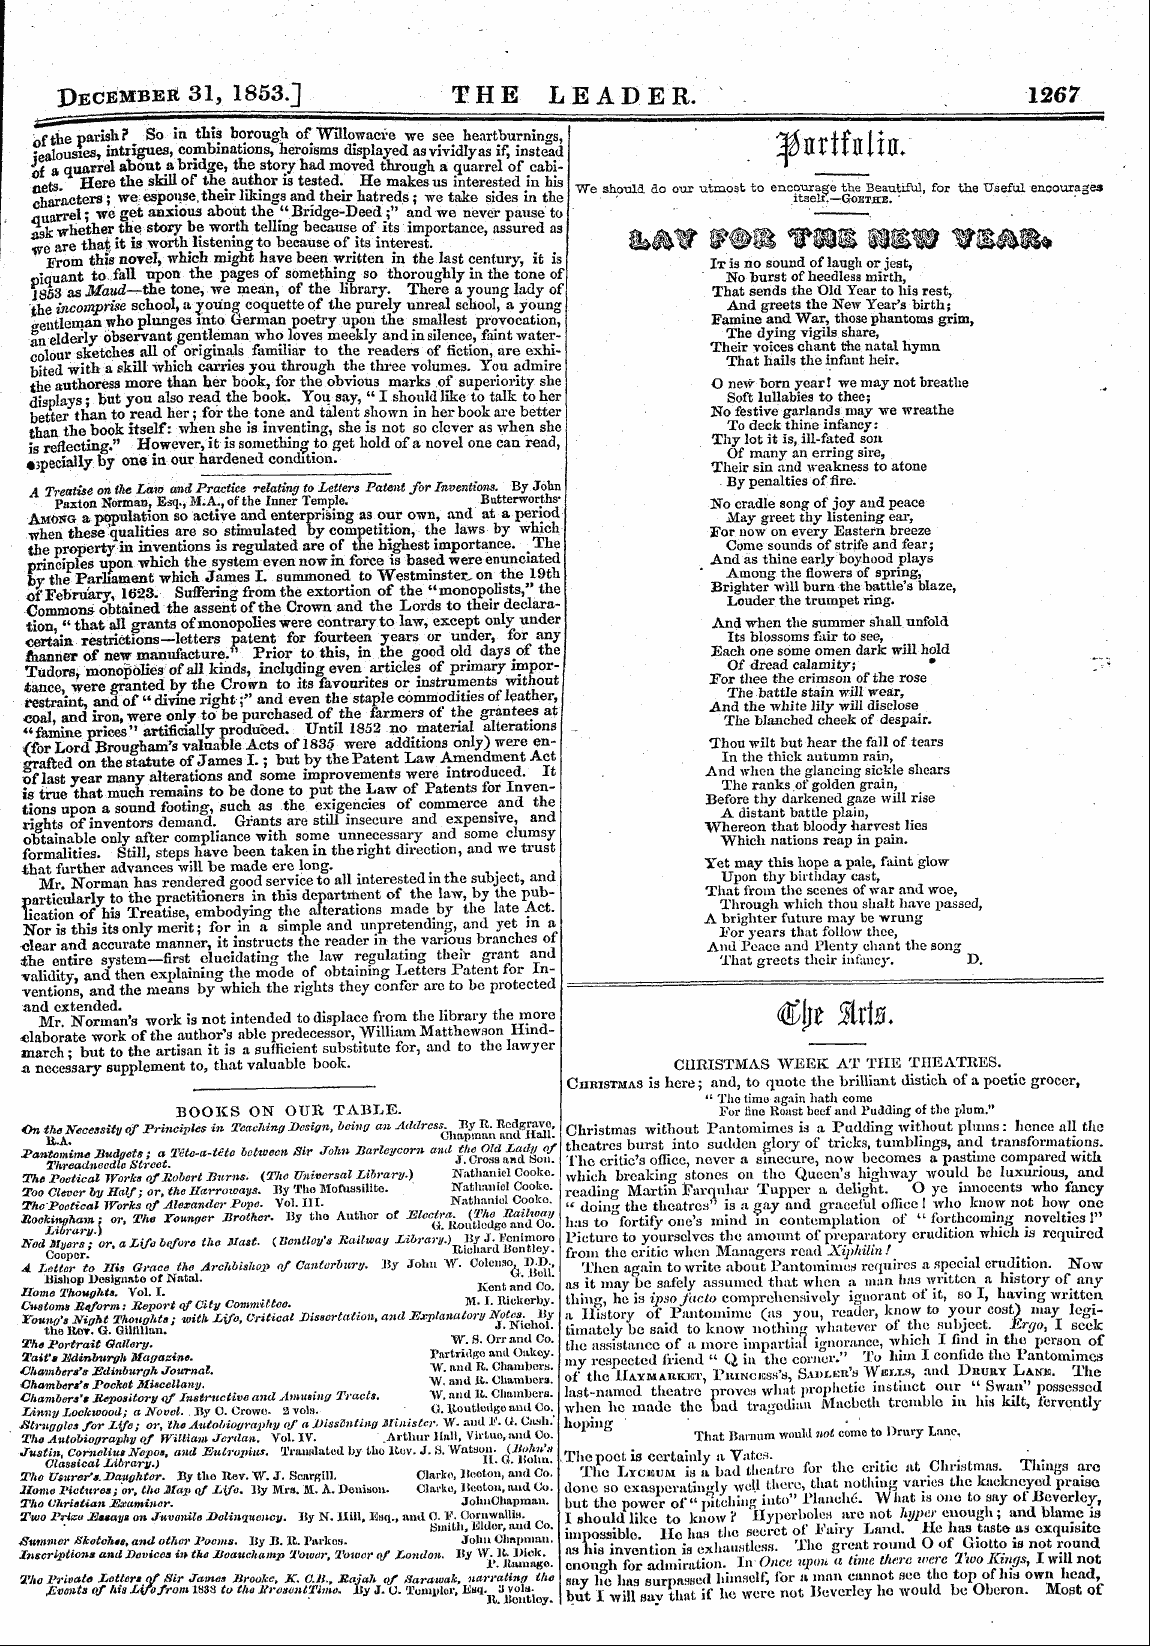 Leader (1850-1860): jS F Y, 1st edition - ^Nrtfalifl.